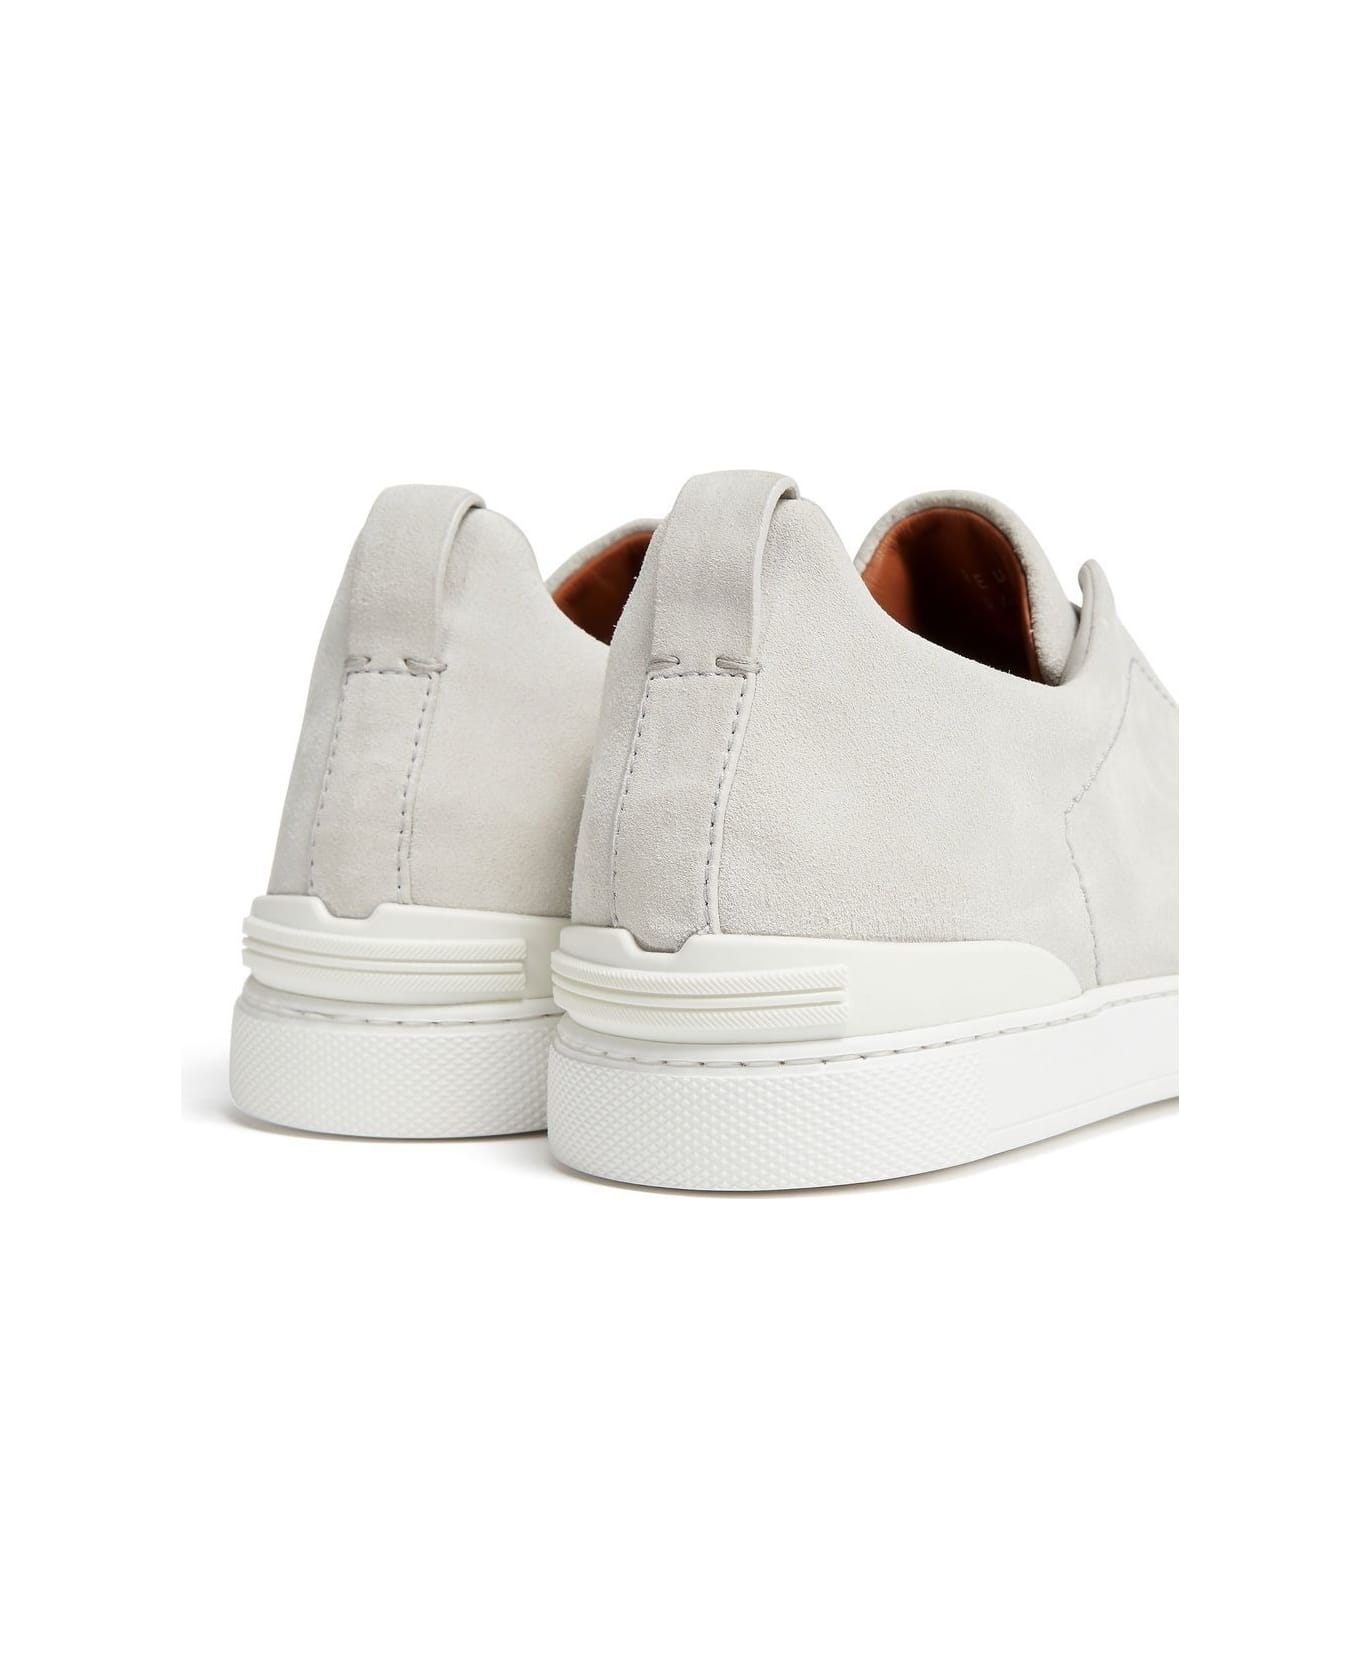 Zegna Triple Stitch Sneakers In White Suede - White